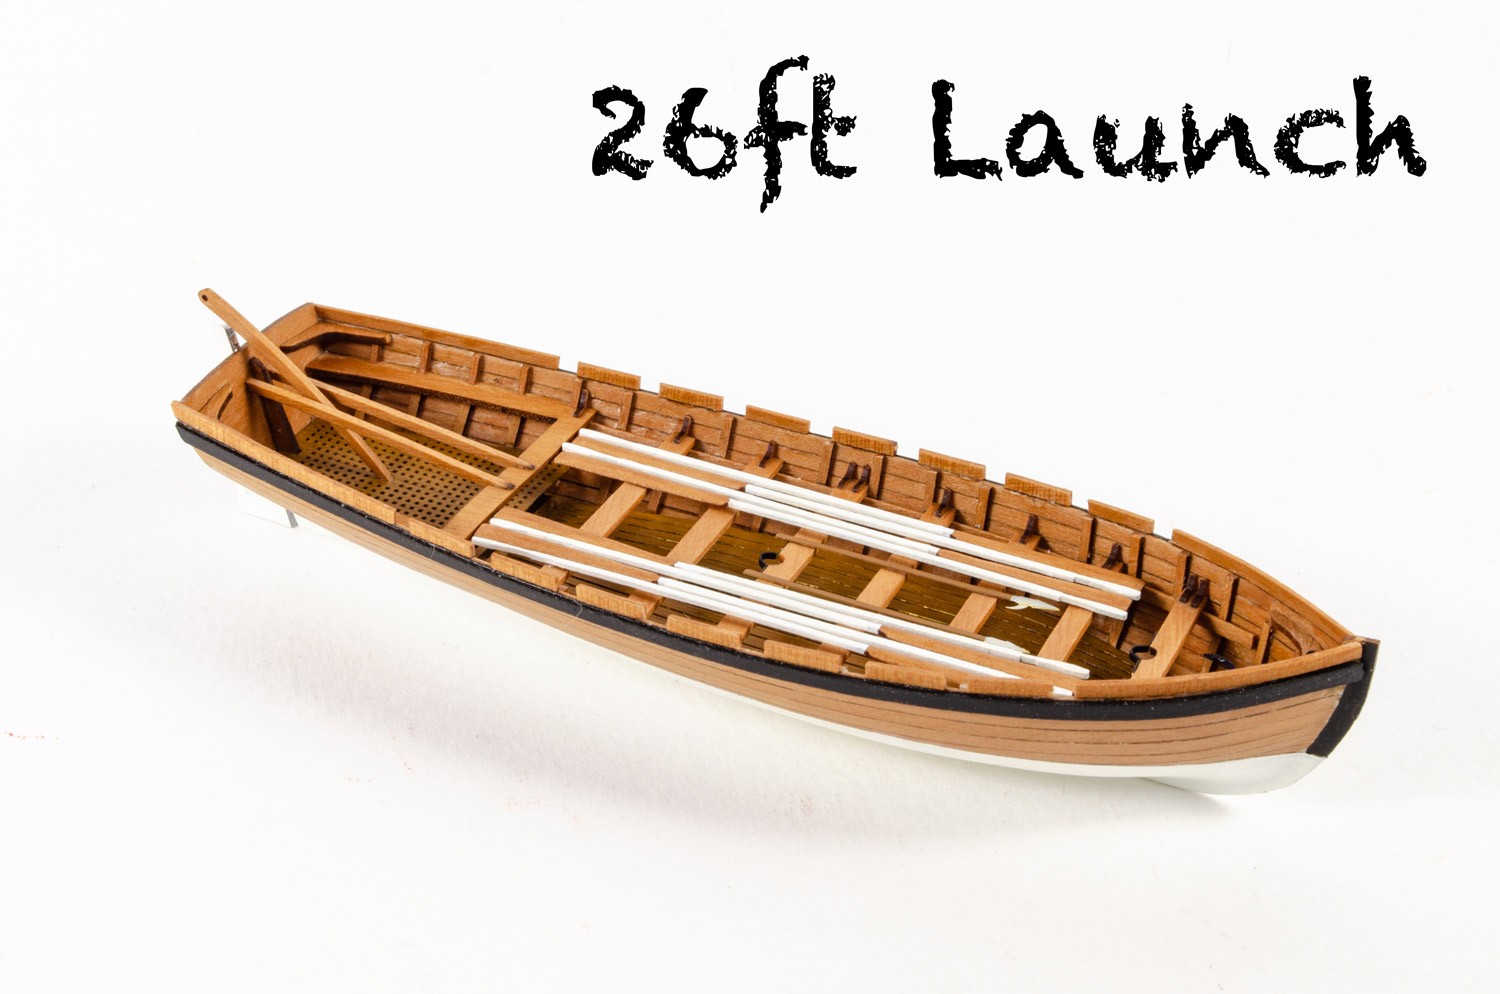 26ft Launch (Vanguard Models, 125mm)